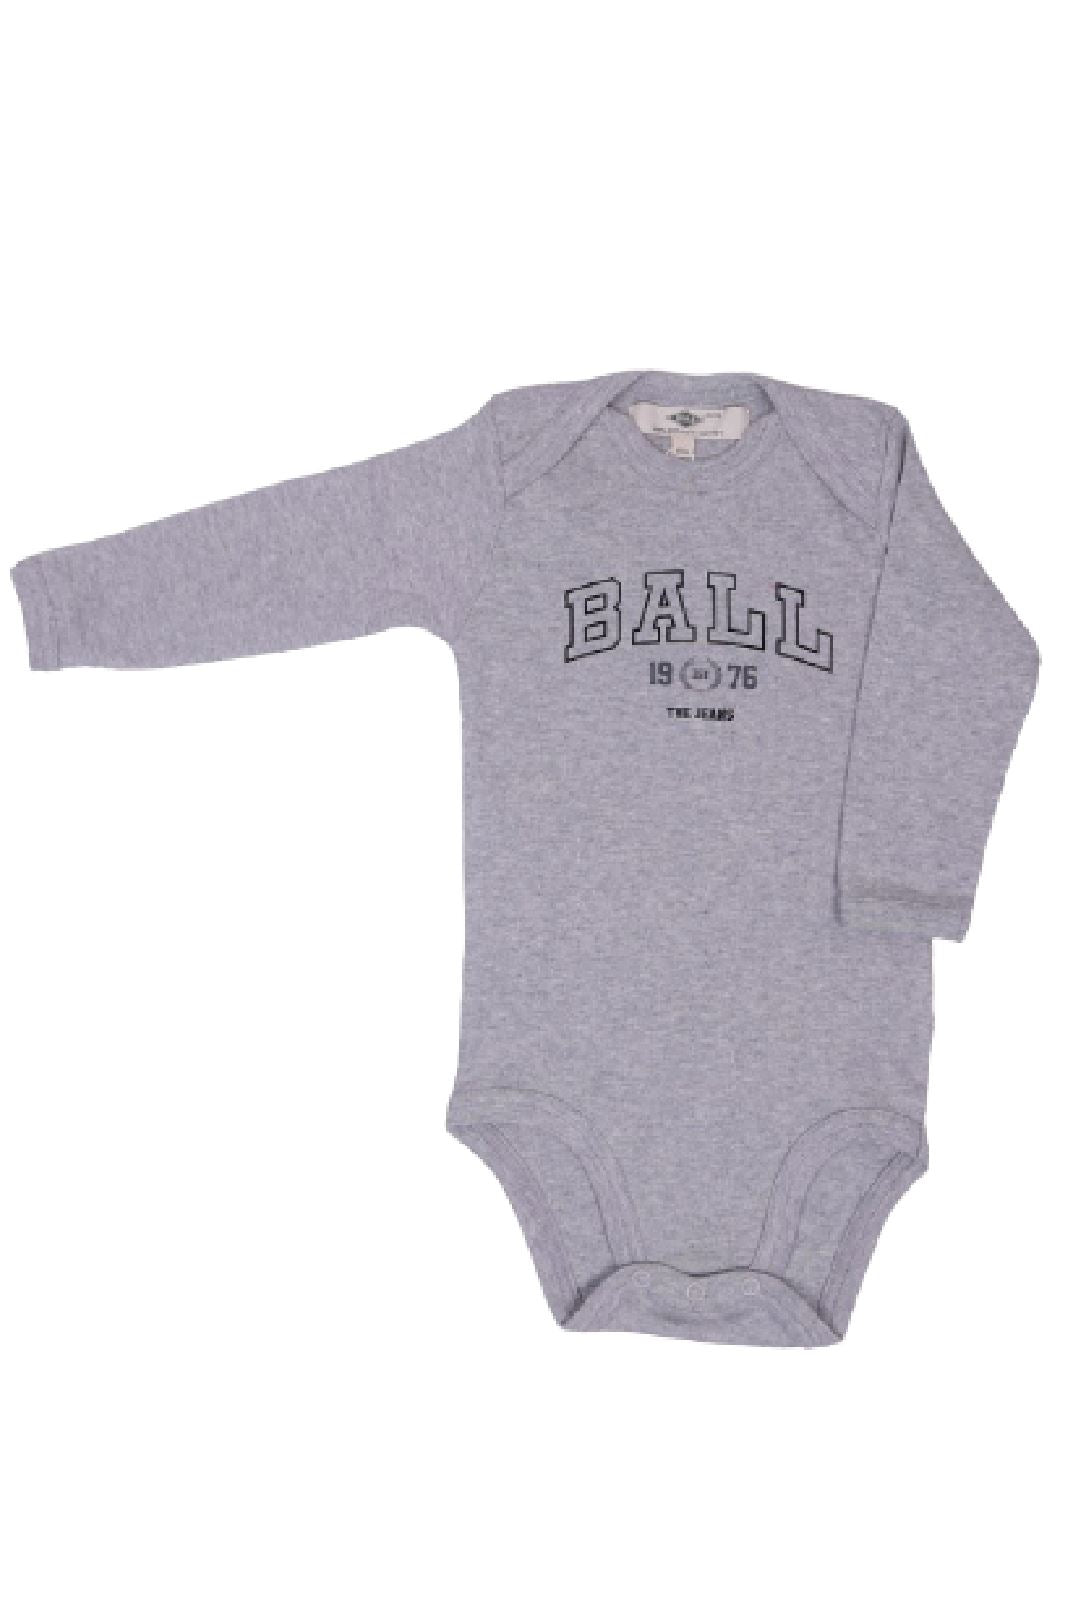 Ball - Baby Body L. Taylor - Grey Melange Bodystockings 